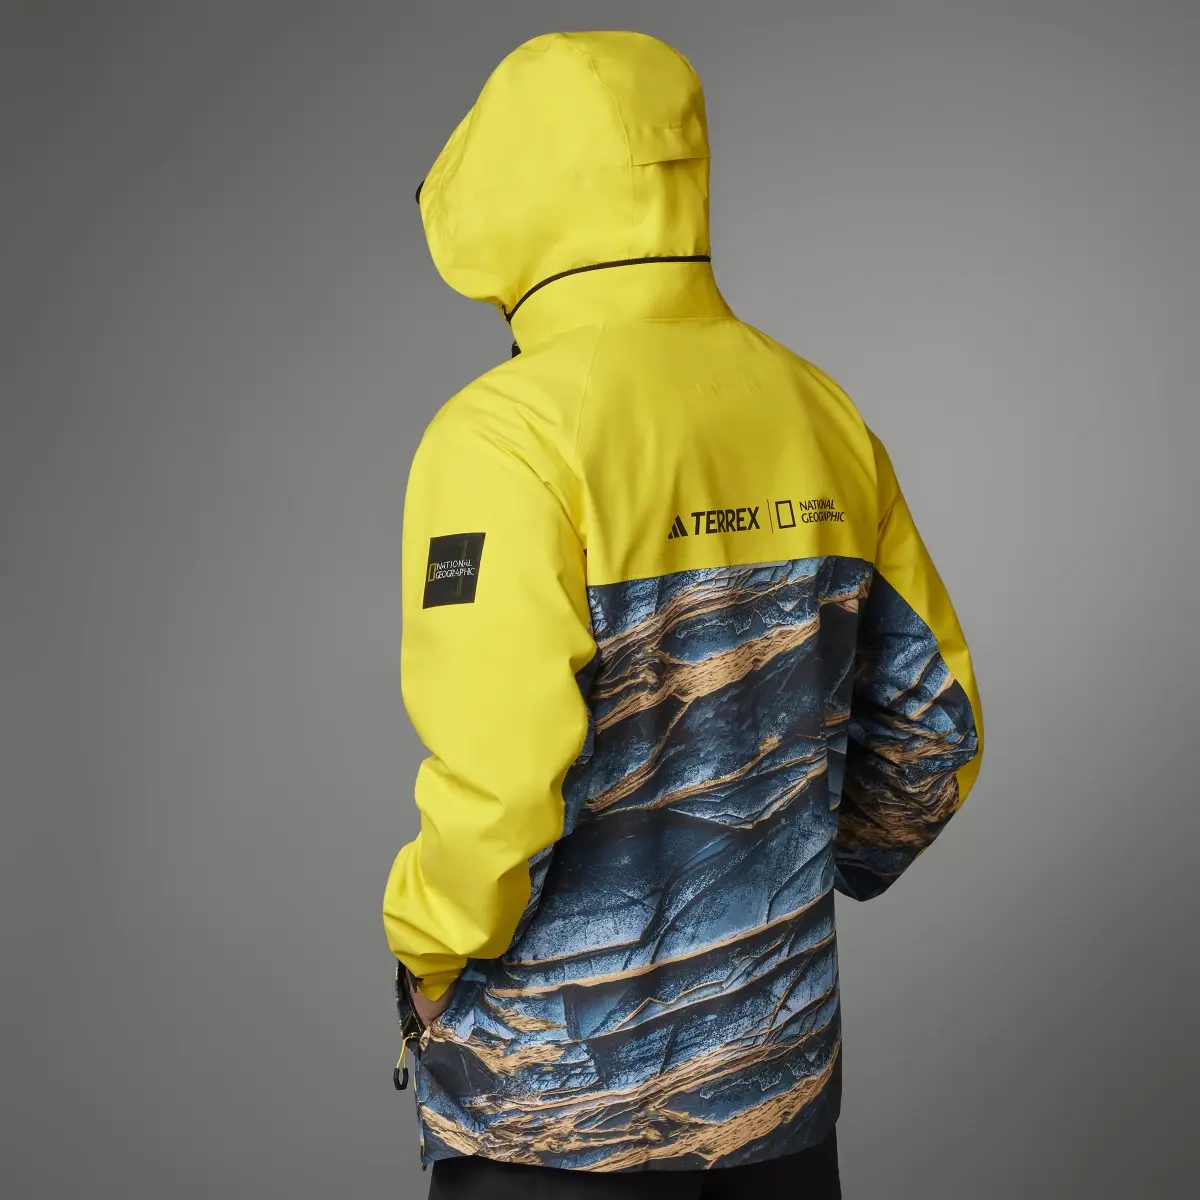 Adidas National Geographic RAIN.RDY Jacket. 2